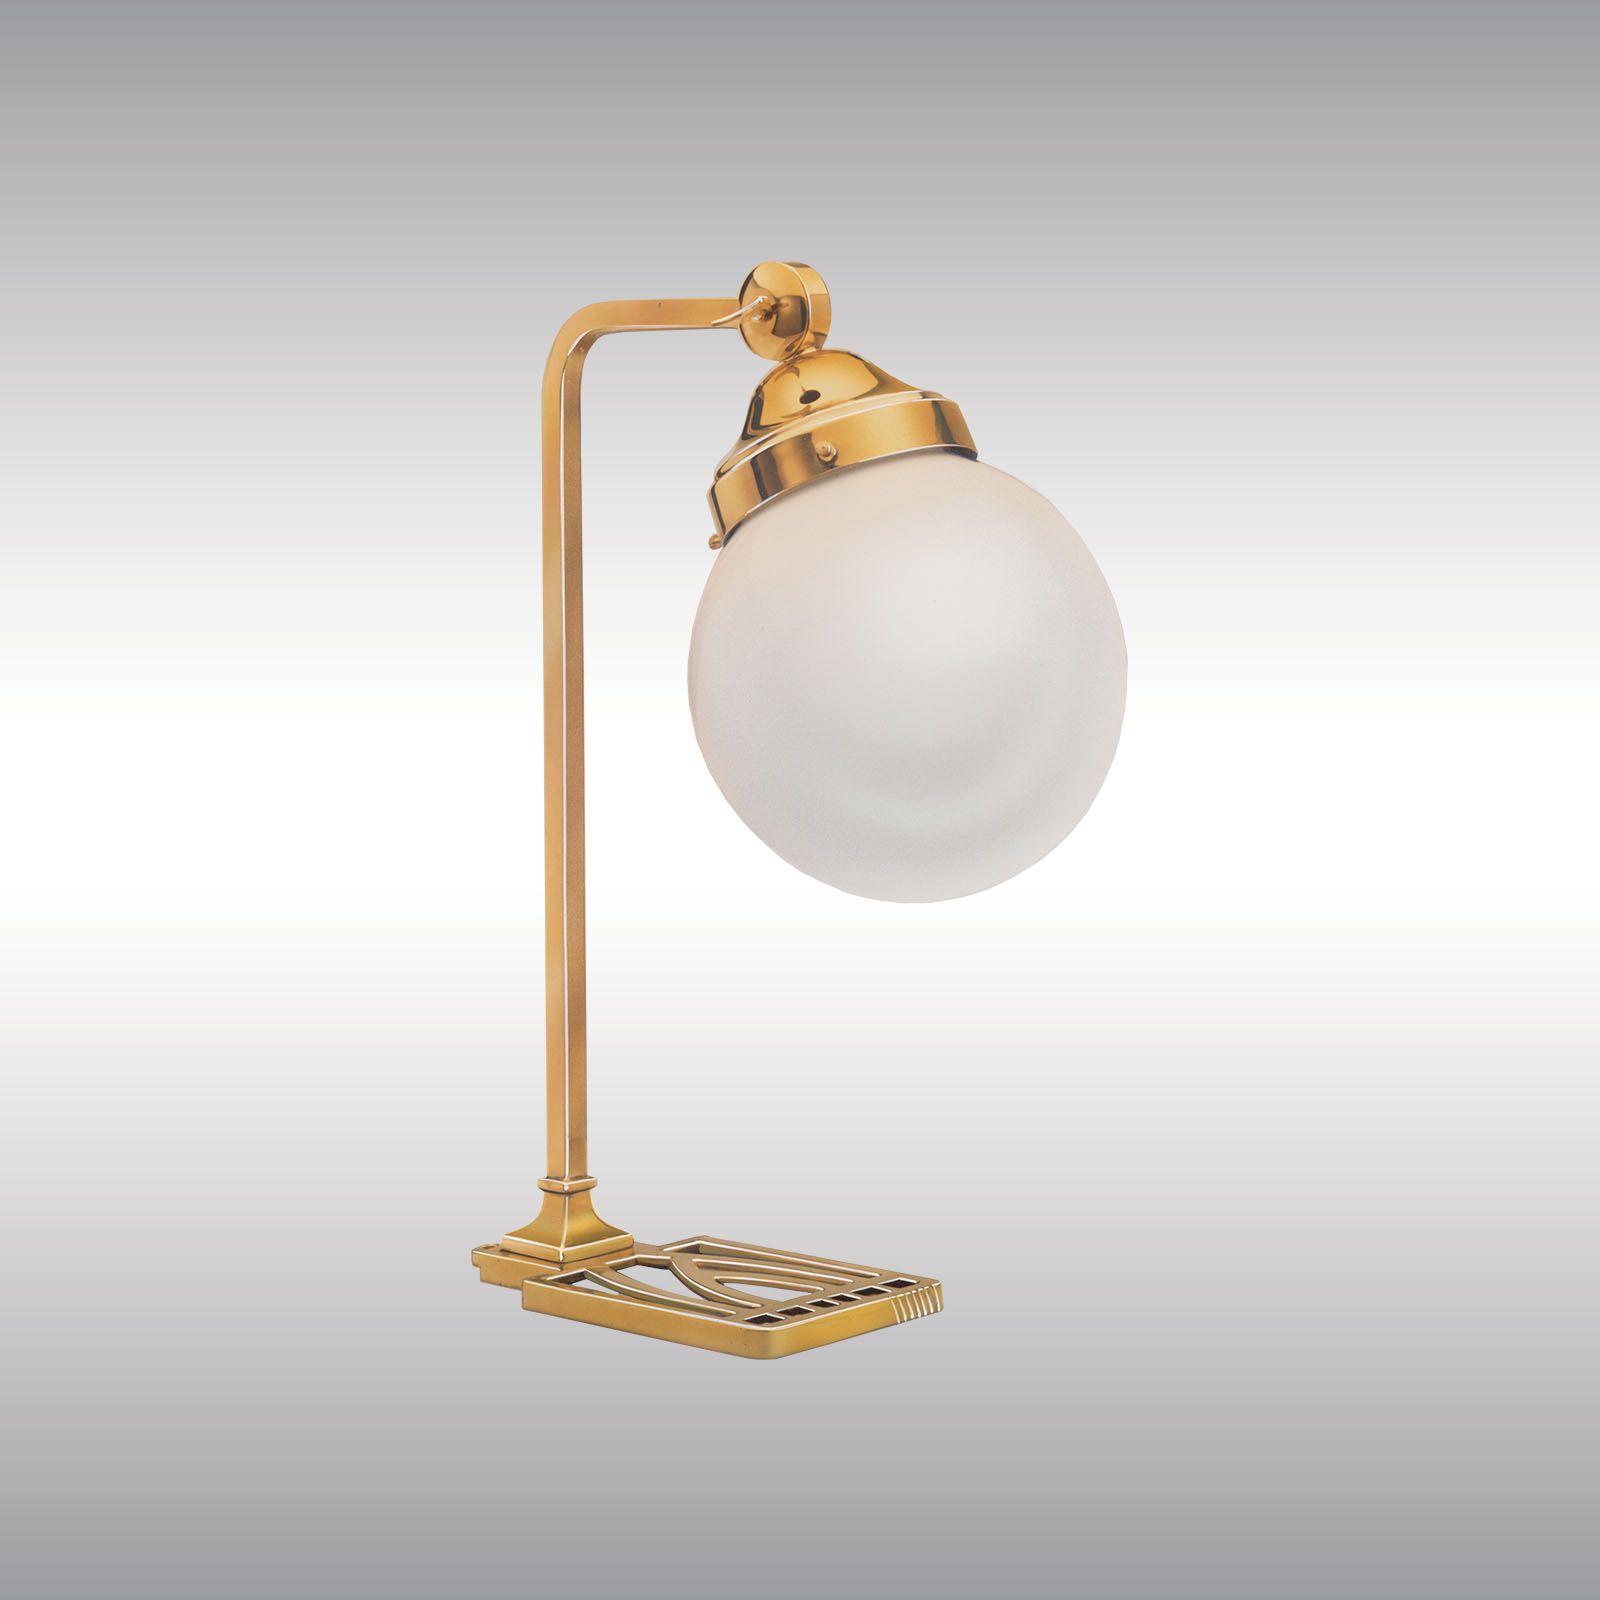 WOKA LAMPS VIENNA - OrderNr.: 48|KM5 - Design: Koloman (Kolo) Moser